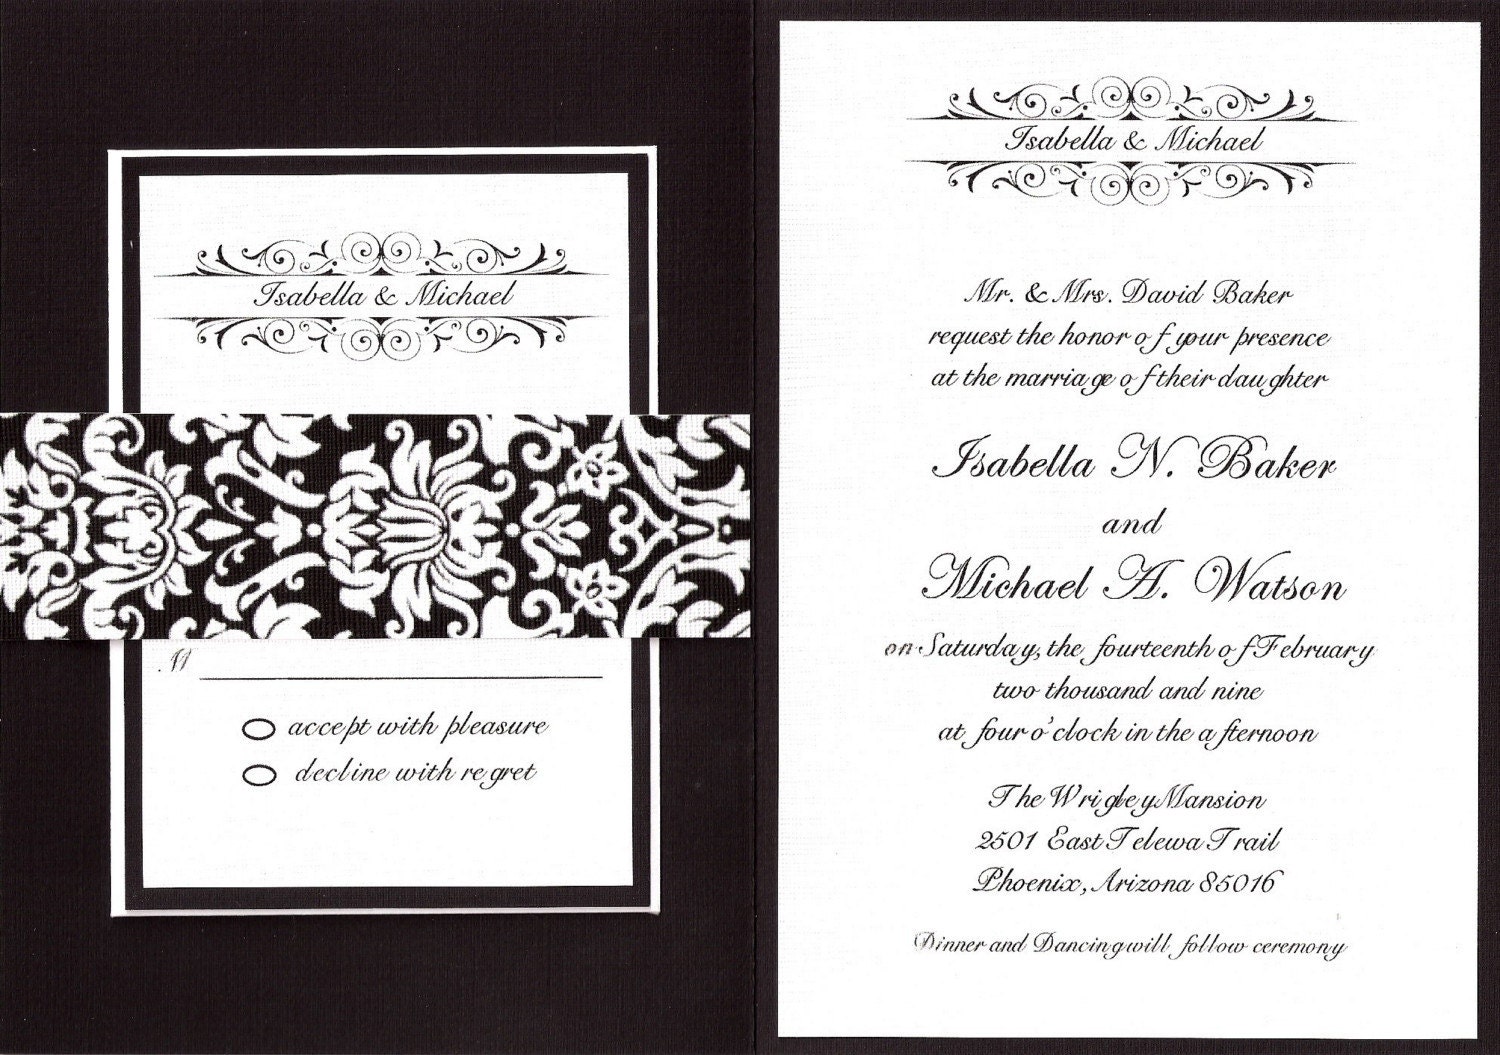 A gorgeous black and white damask wedding invitation